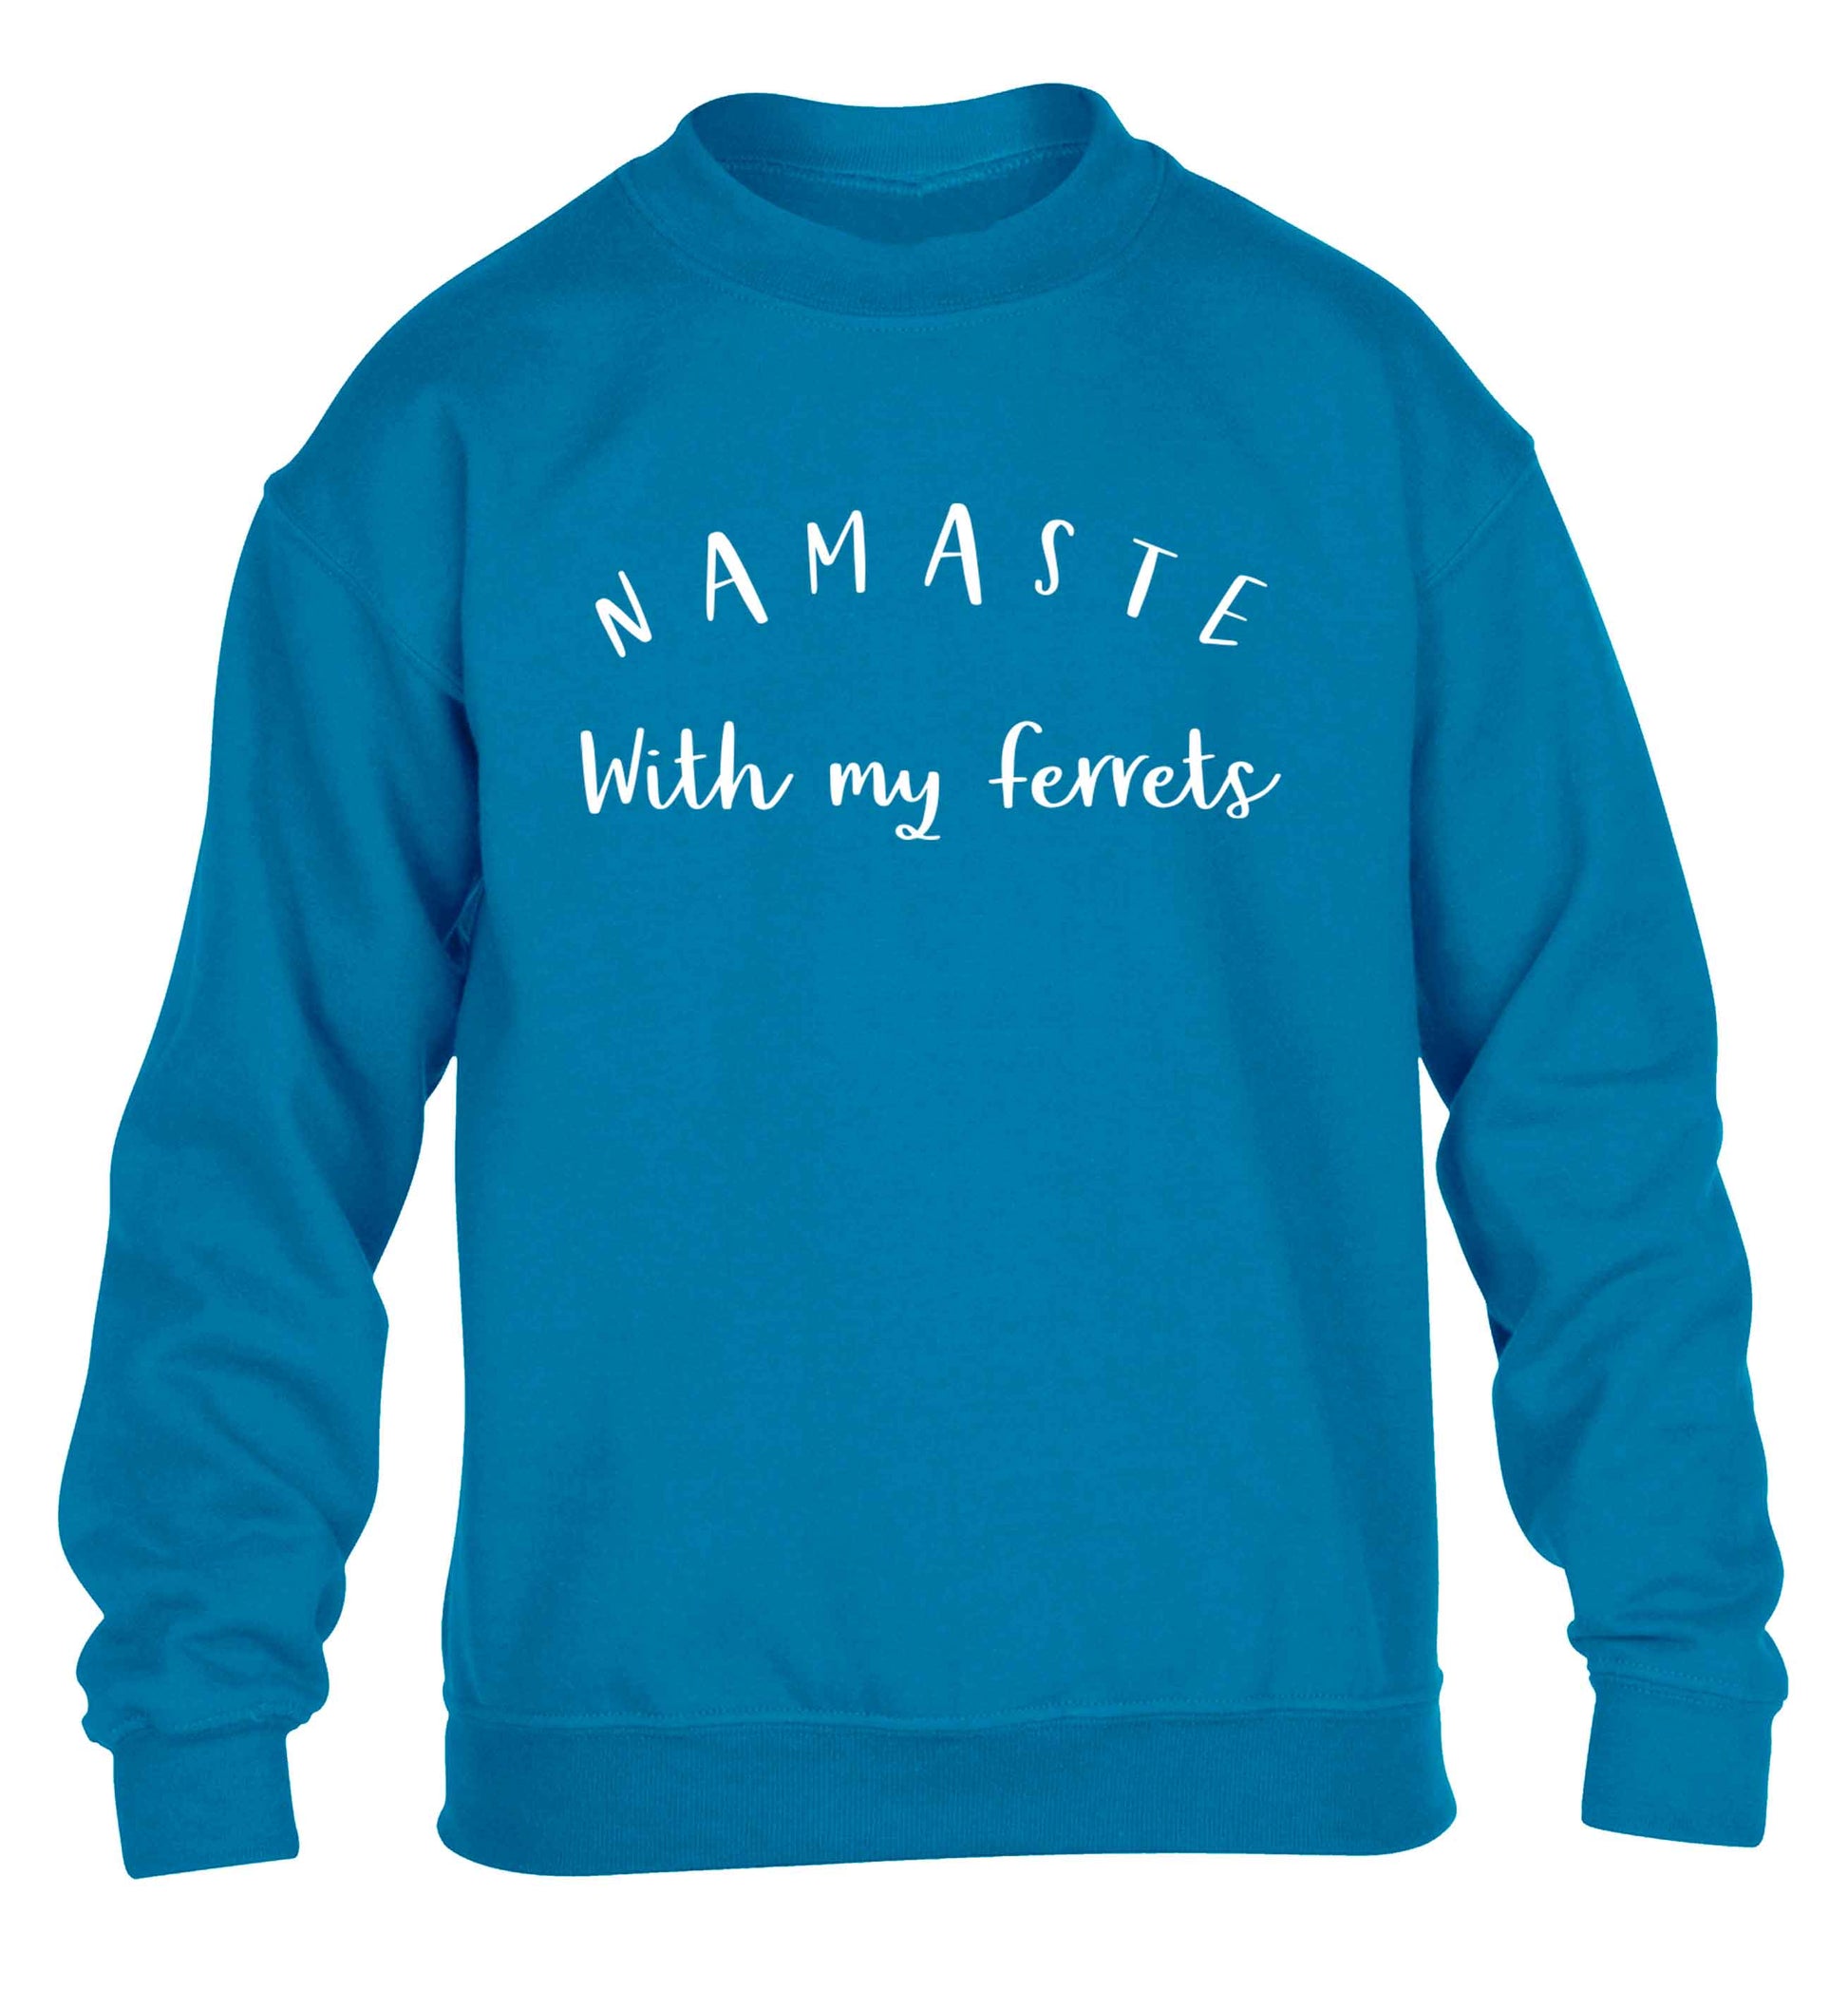 Namaste with my ferrets children's blue sweater 12-13 Years